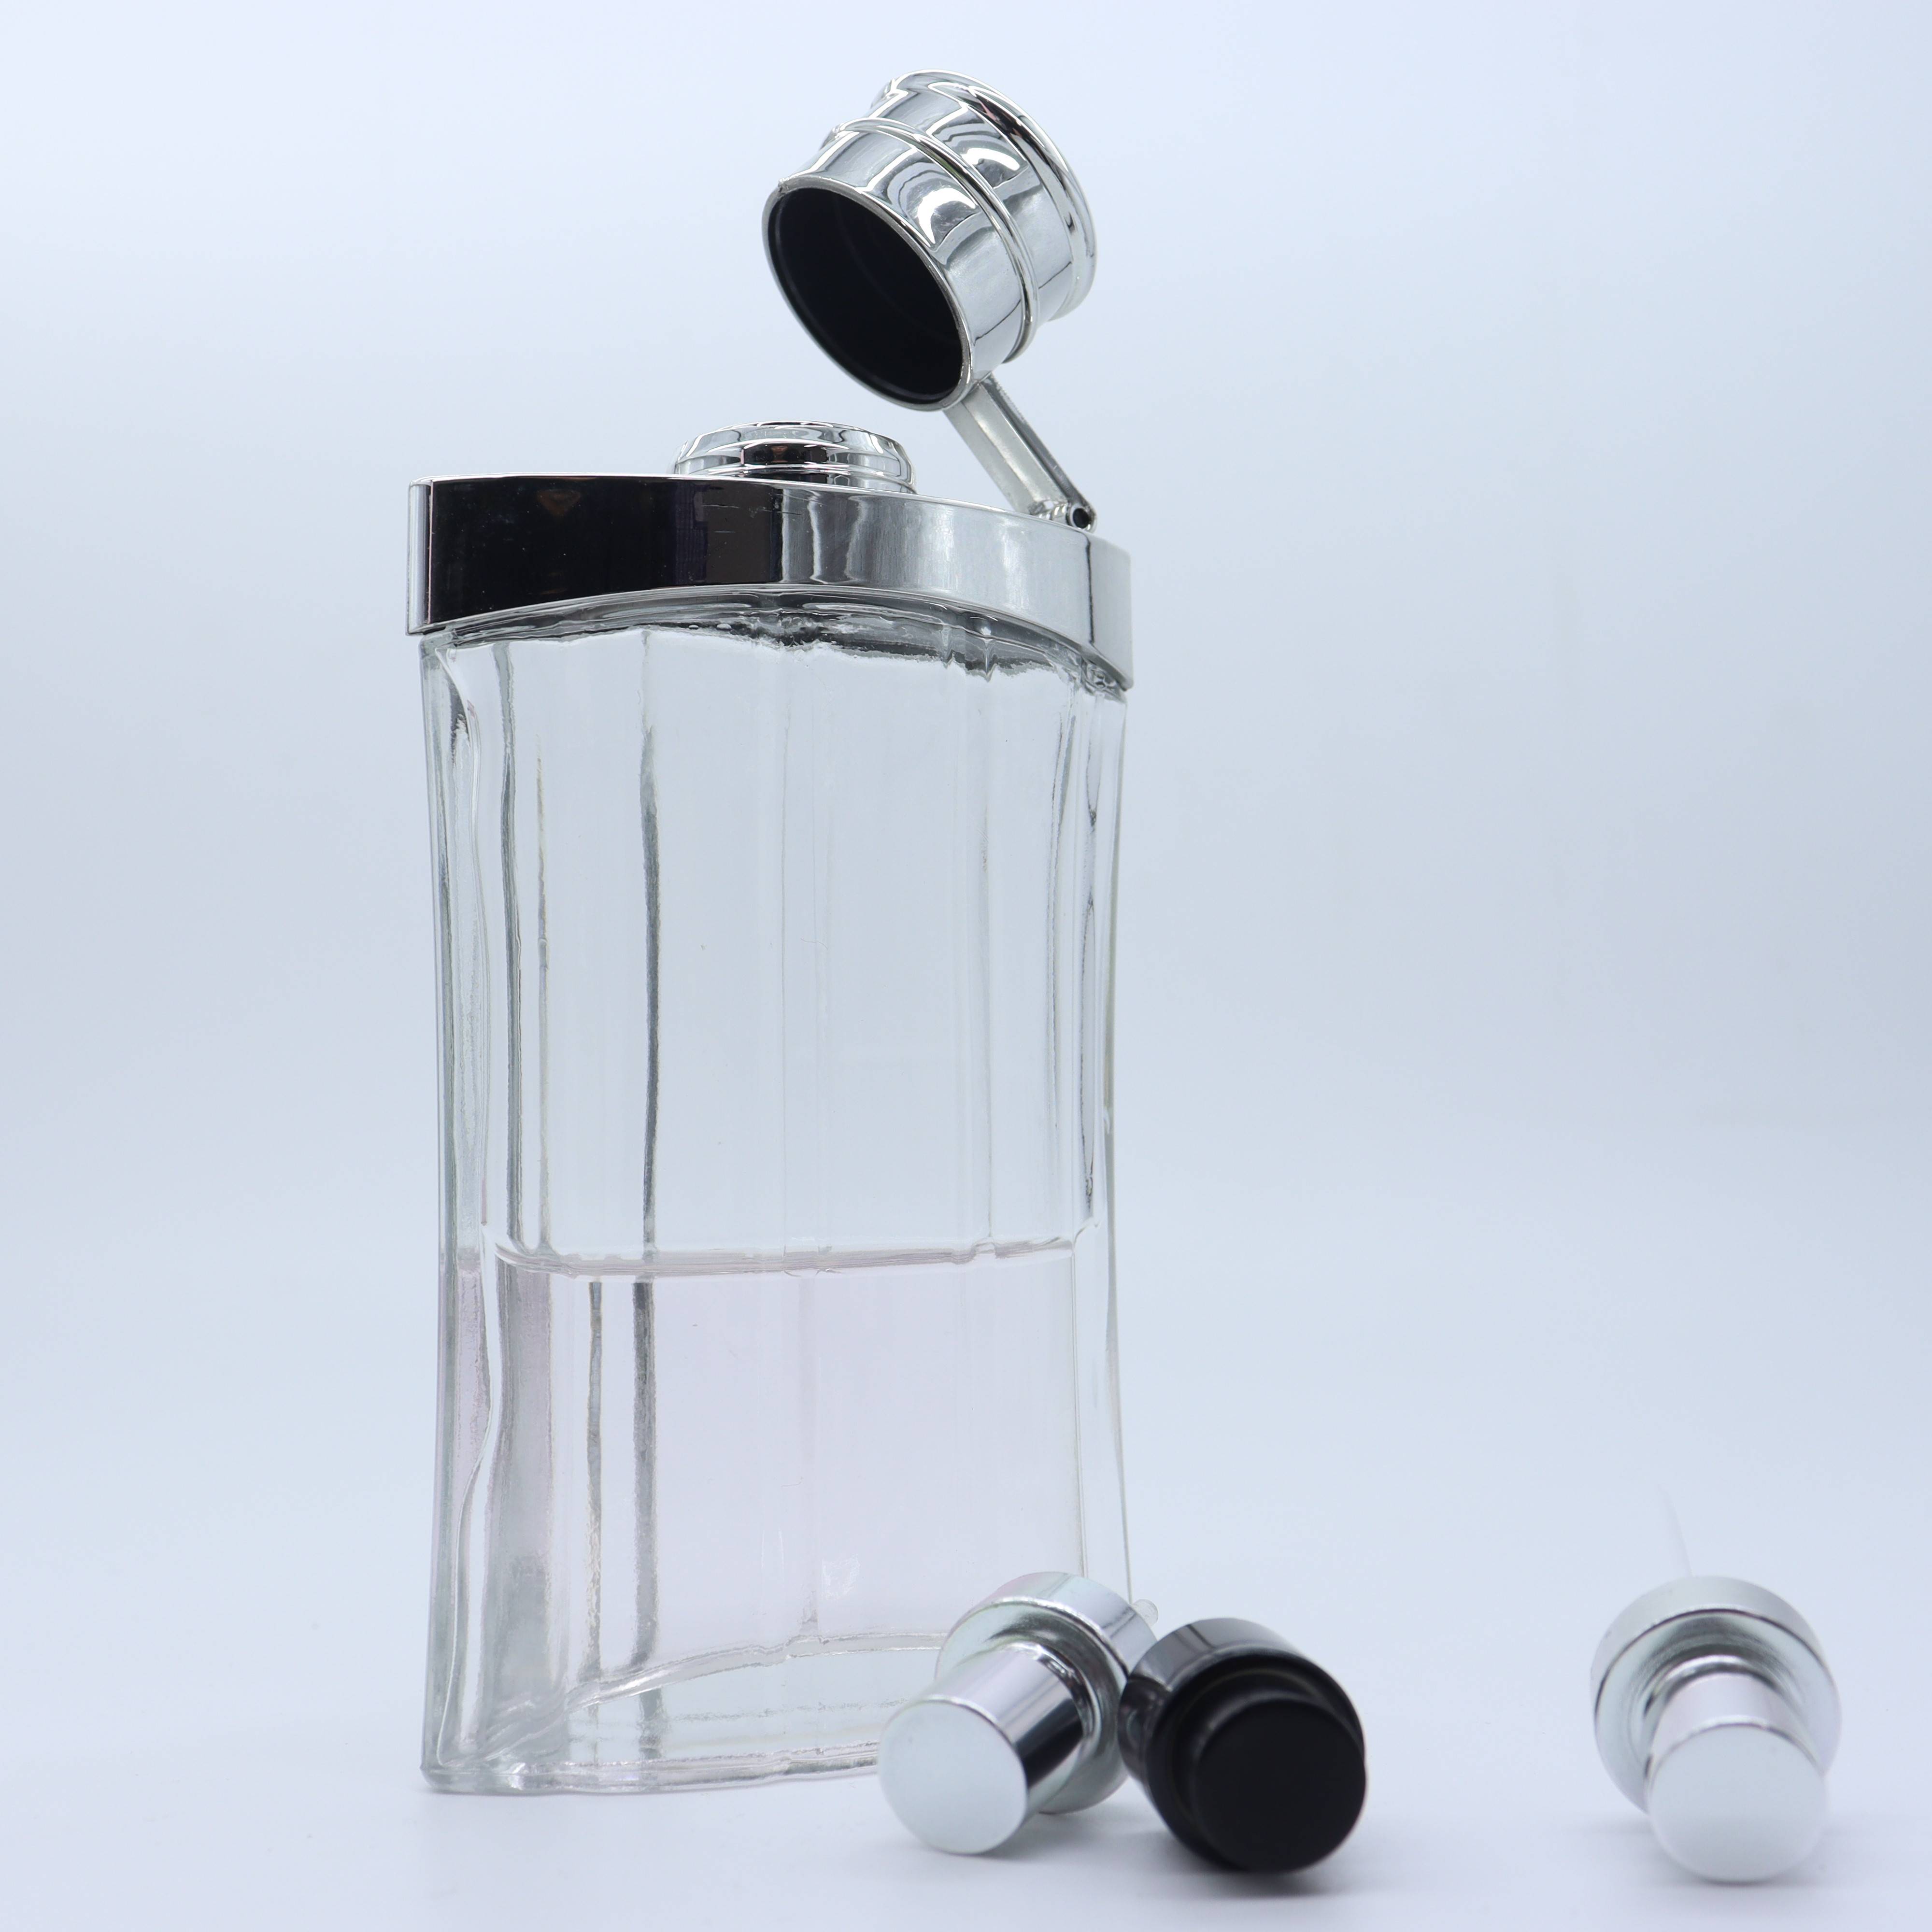 Factory price perfume bottle screw cap glass bottles nice designed with pump spray